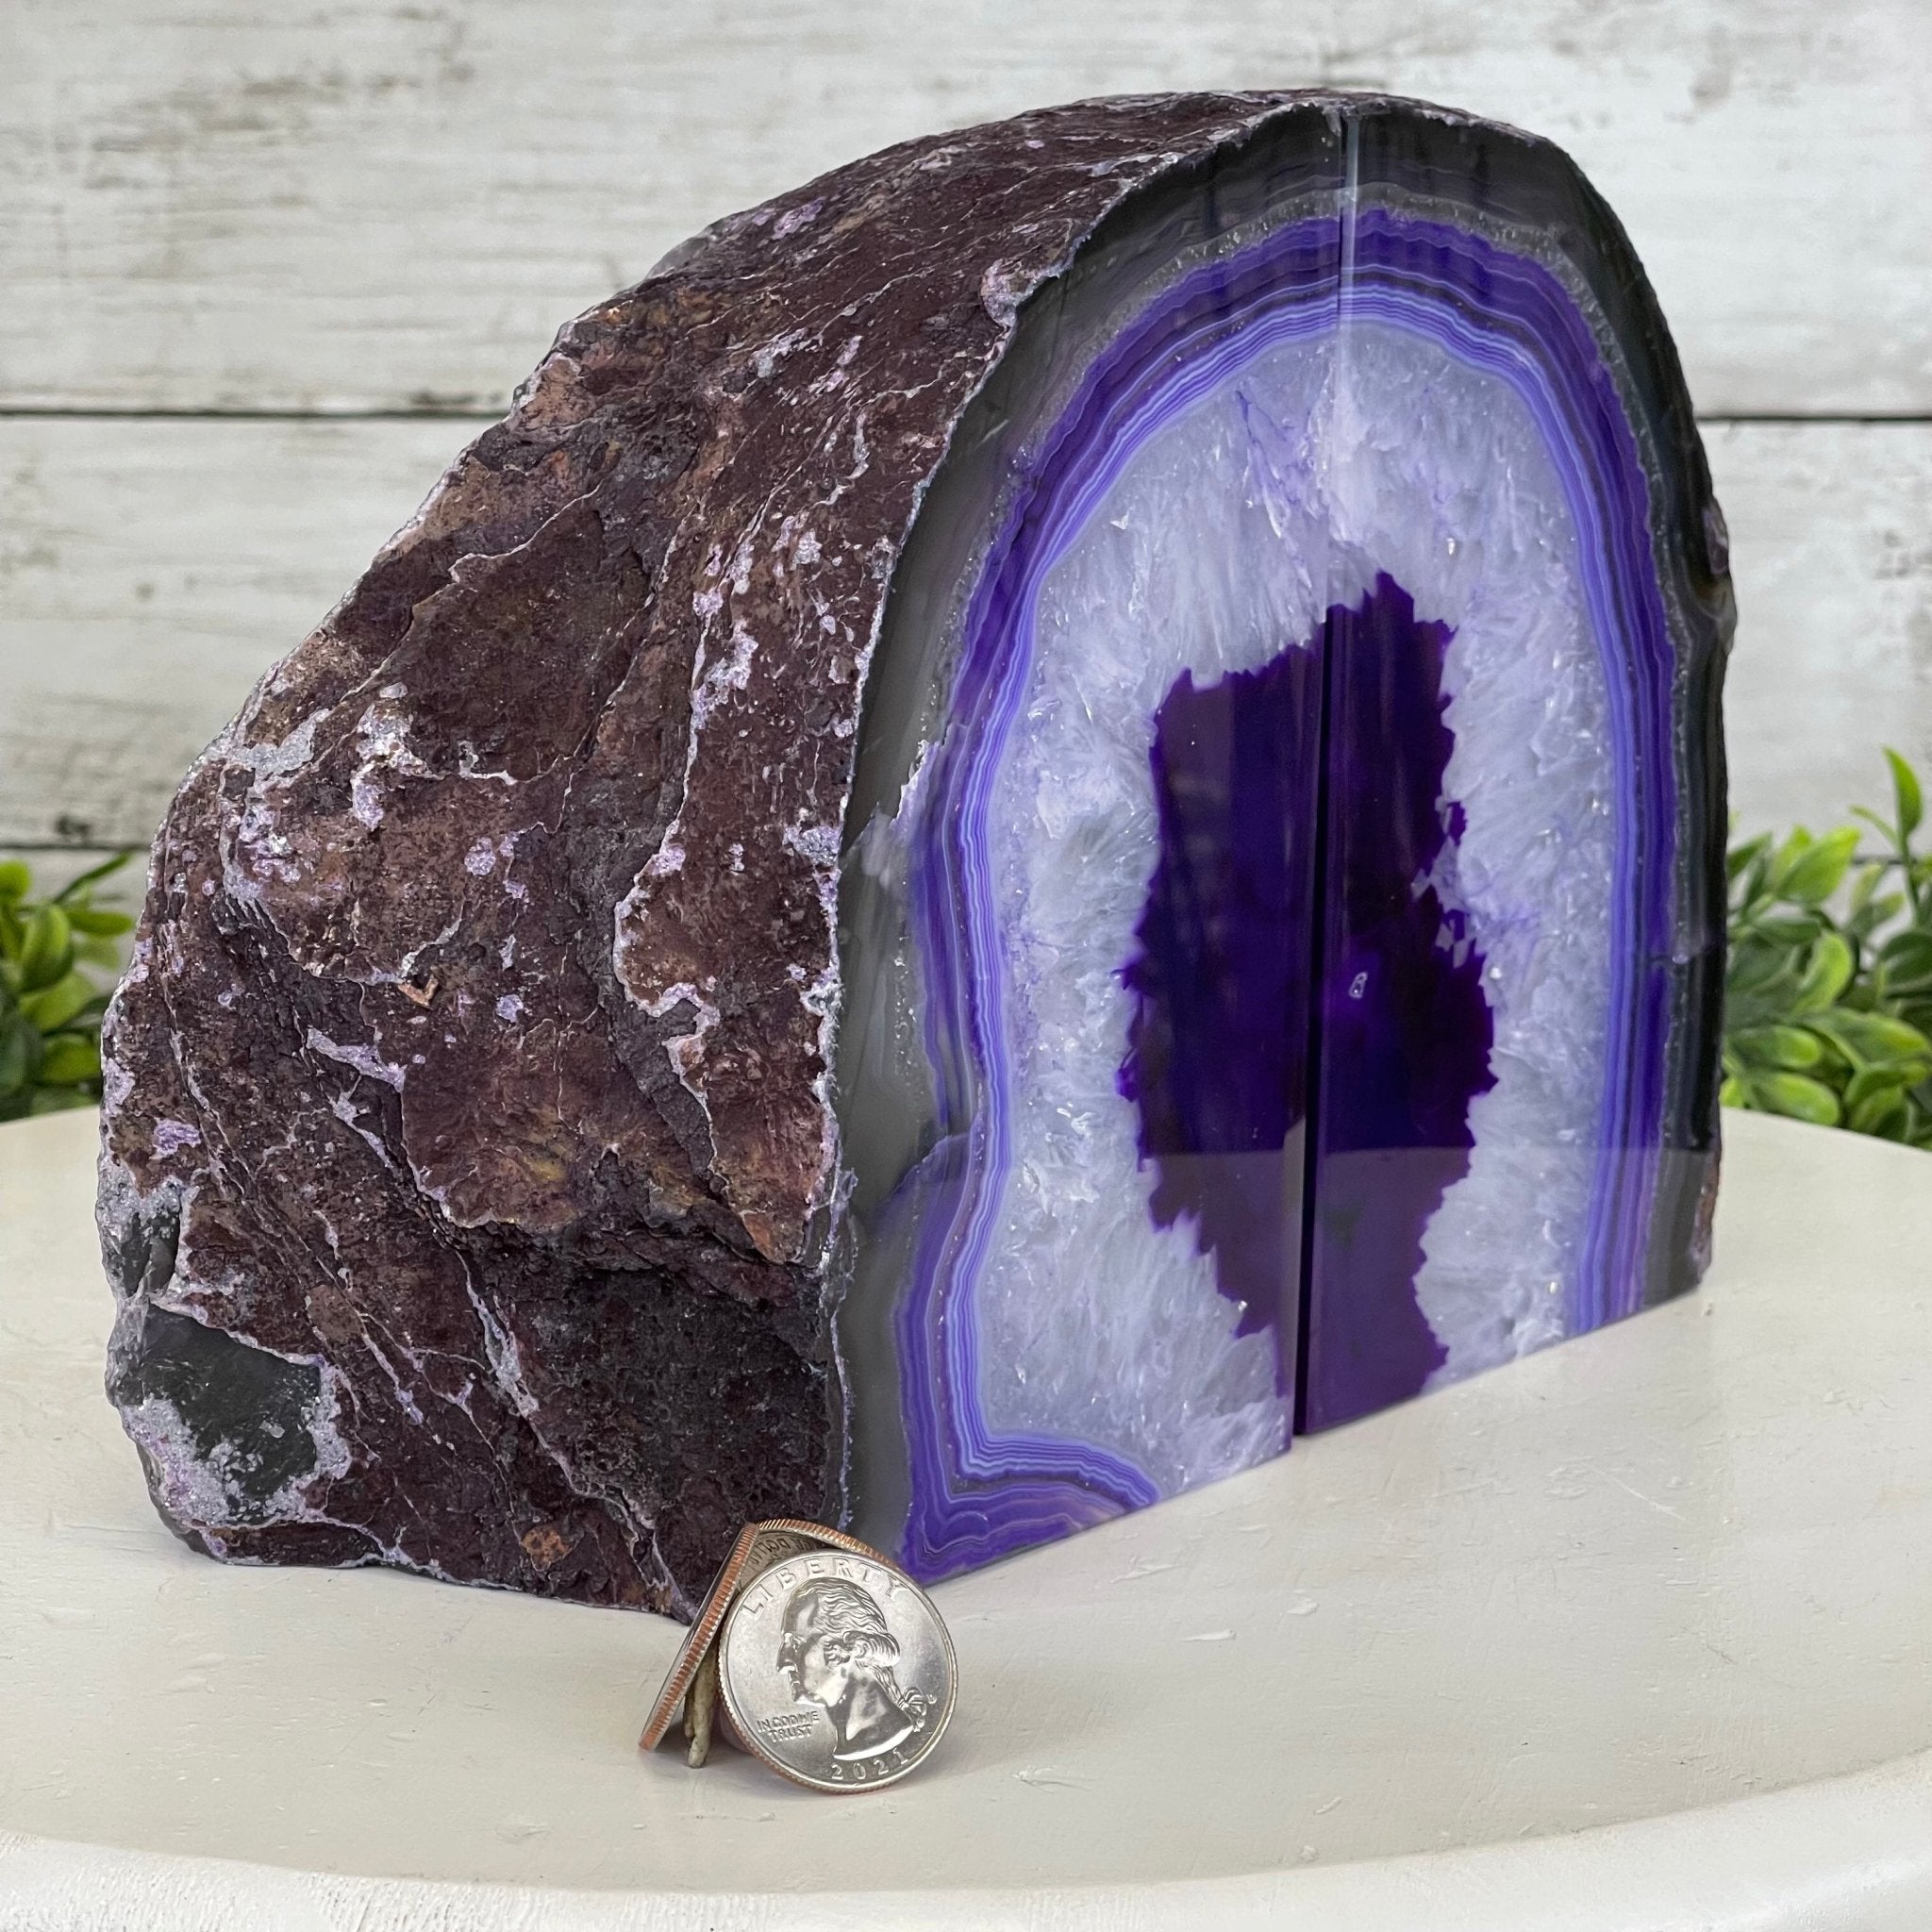 Purple Dyed Brazilian Agate Stone Bookends, 12.1 lbs & 6.2" tall Model #5151PU-032 by Brazil Gems - Brazil GemsBrazil GemsPurple Dyed Brazilian Agate Stone Bookends, 12.1 lbs & 6.2" tall Model #5151PU-032 by Brazil GemsBookends5151PU-032